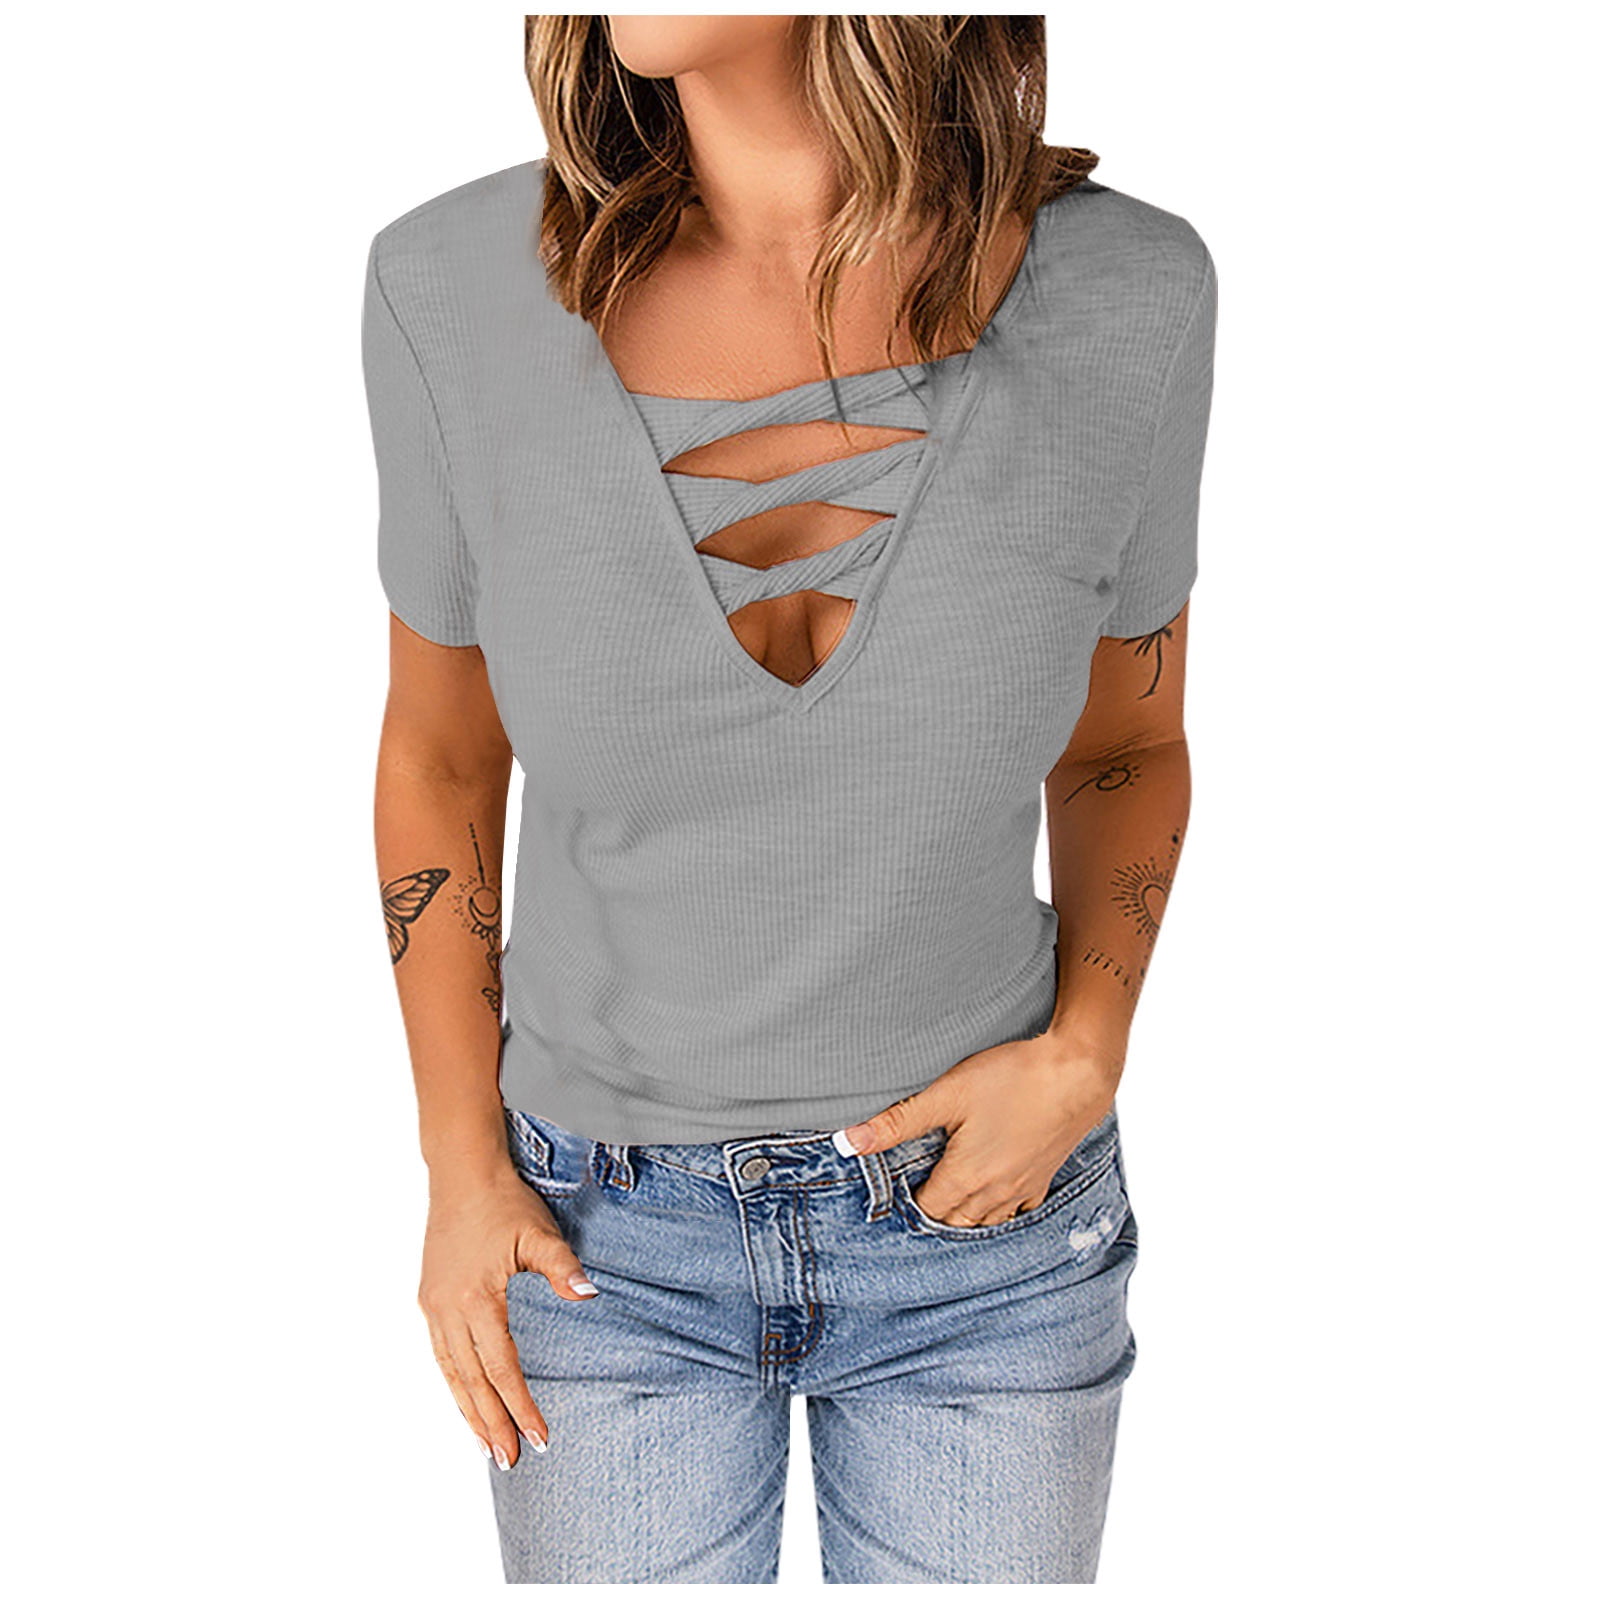 JSGEK Savings Women's Summer Casual T-shirt Solid Color Short Sleeve V ...